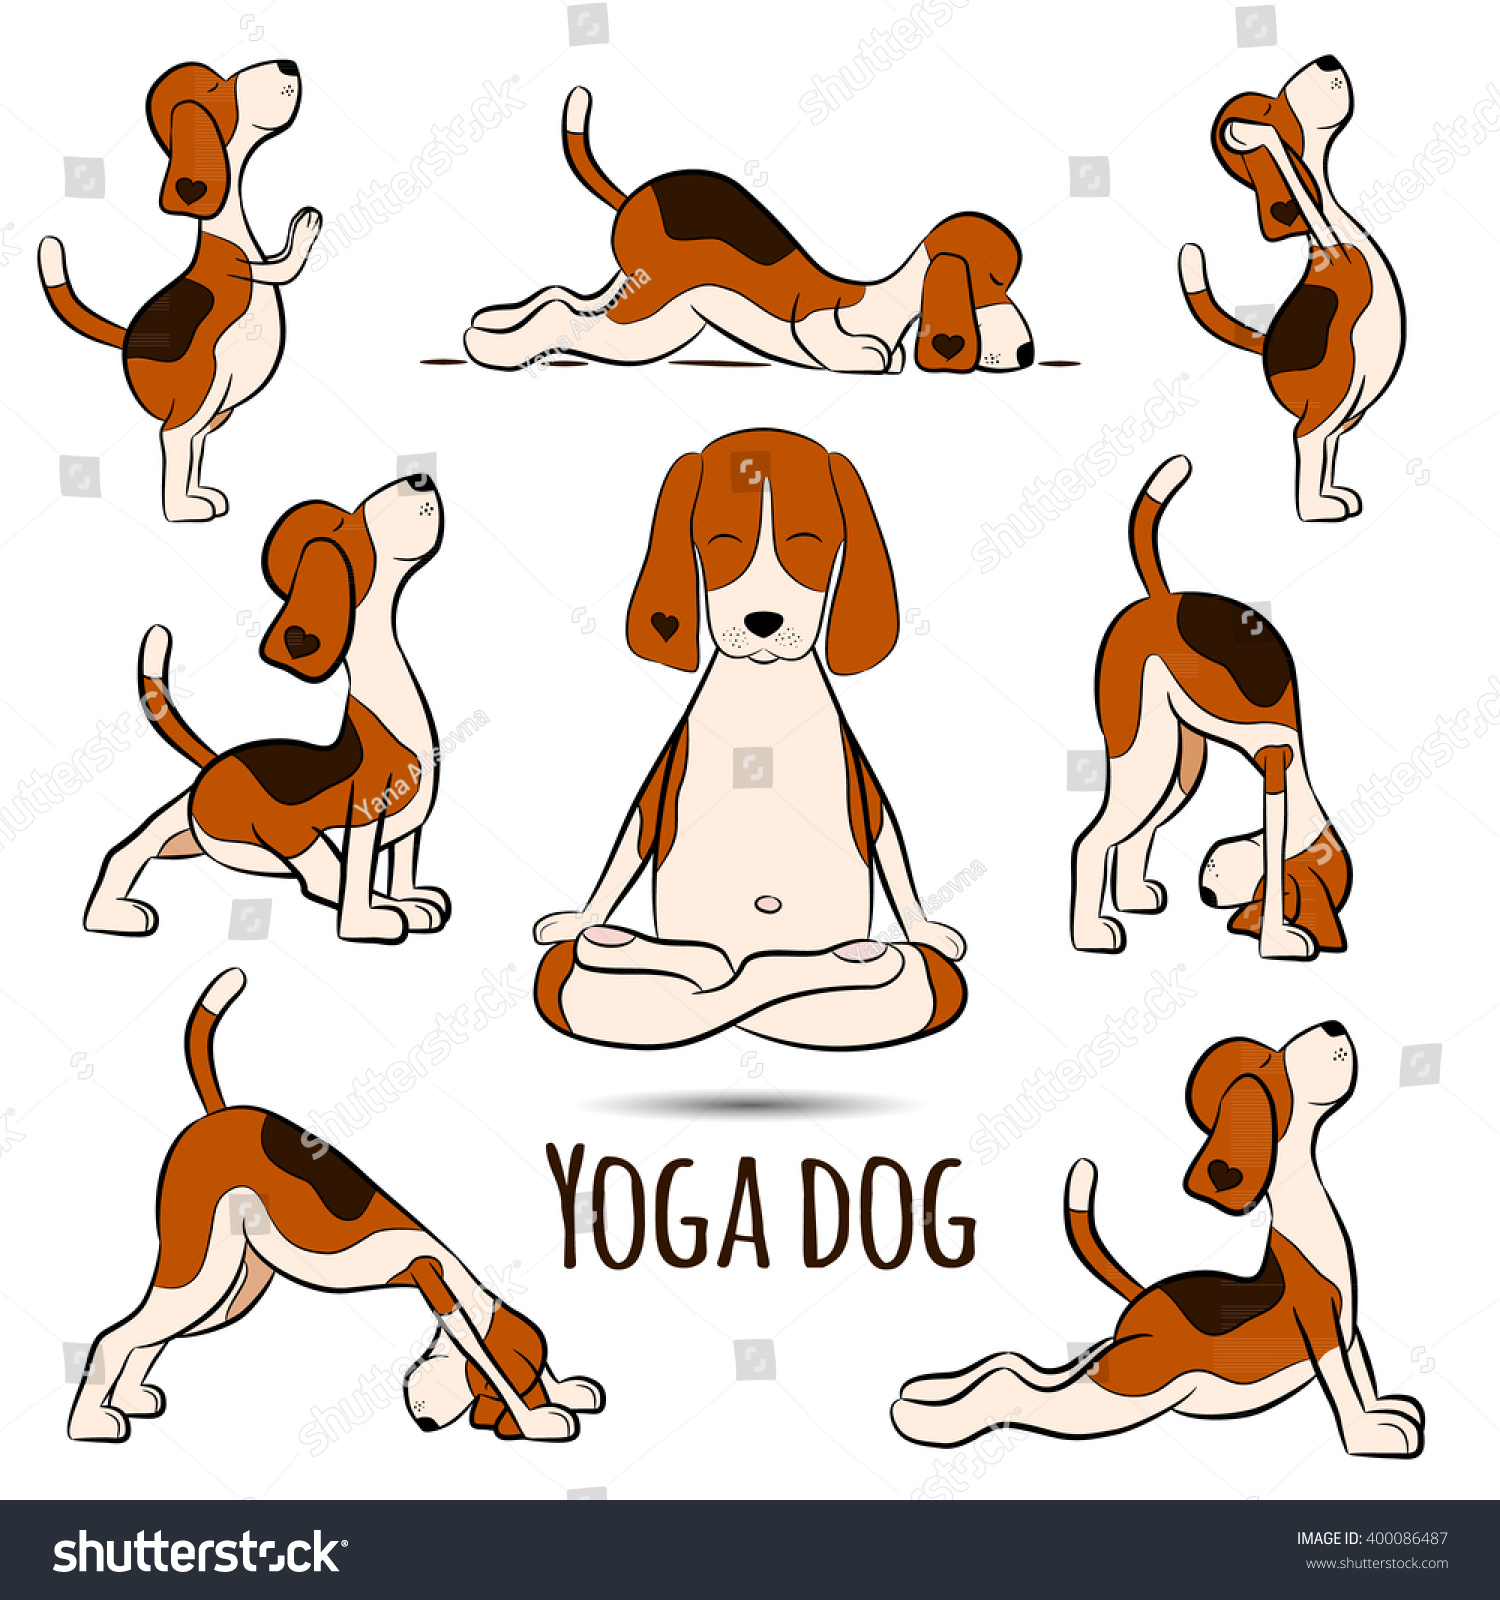 yoga dog clipart - photo #3